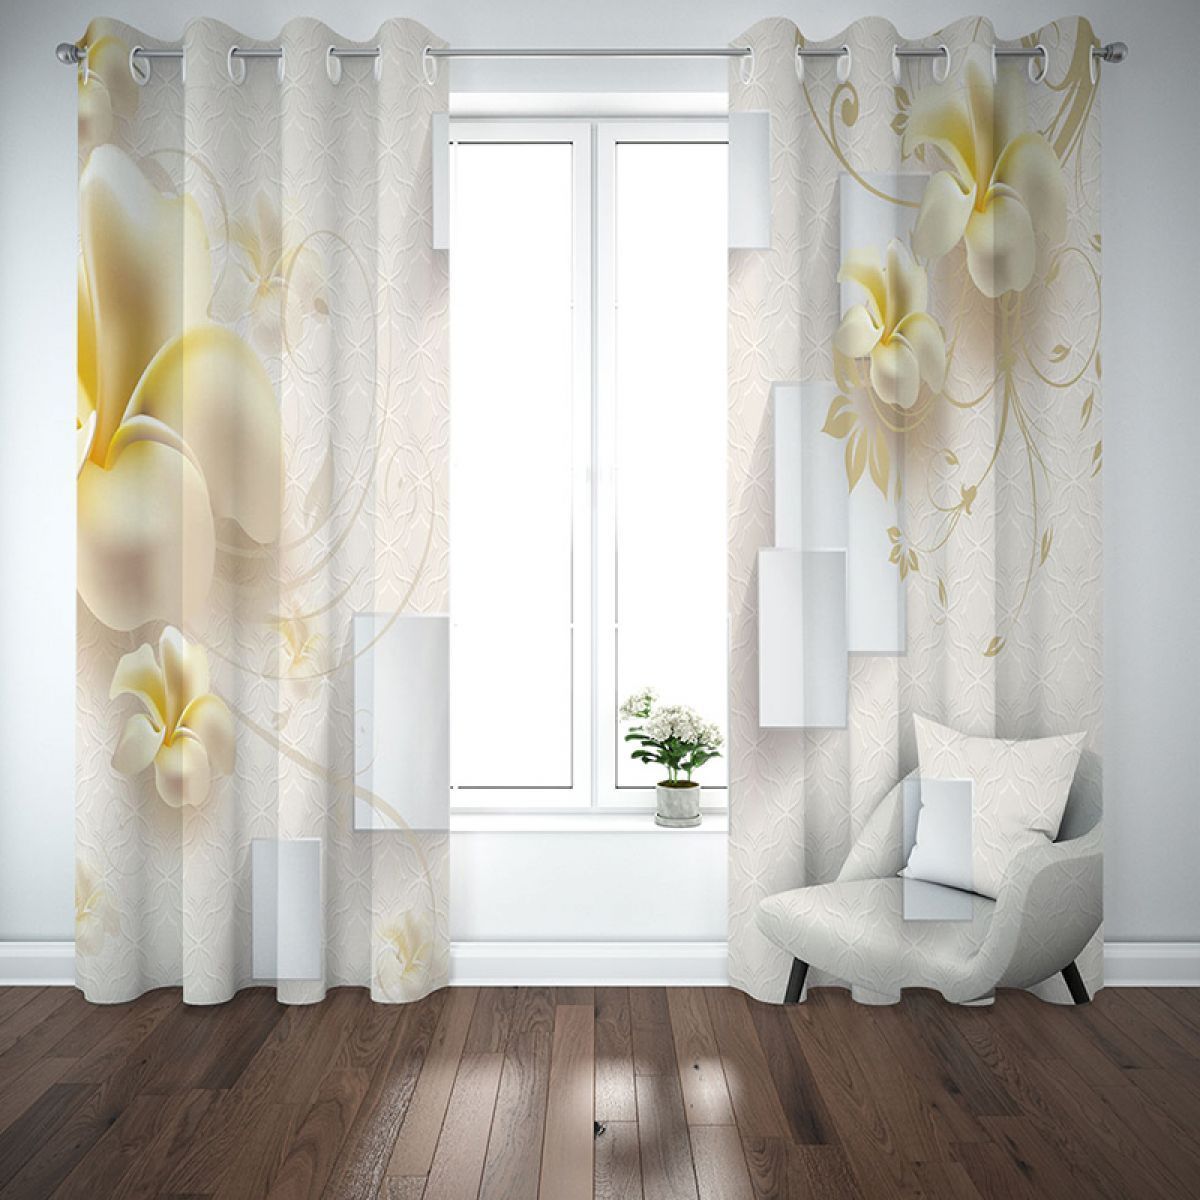 3d Plumeria Rubra And Vines Printed Window Curtain Home Decor